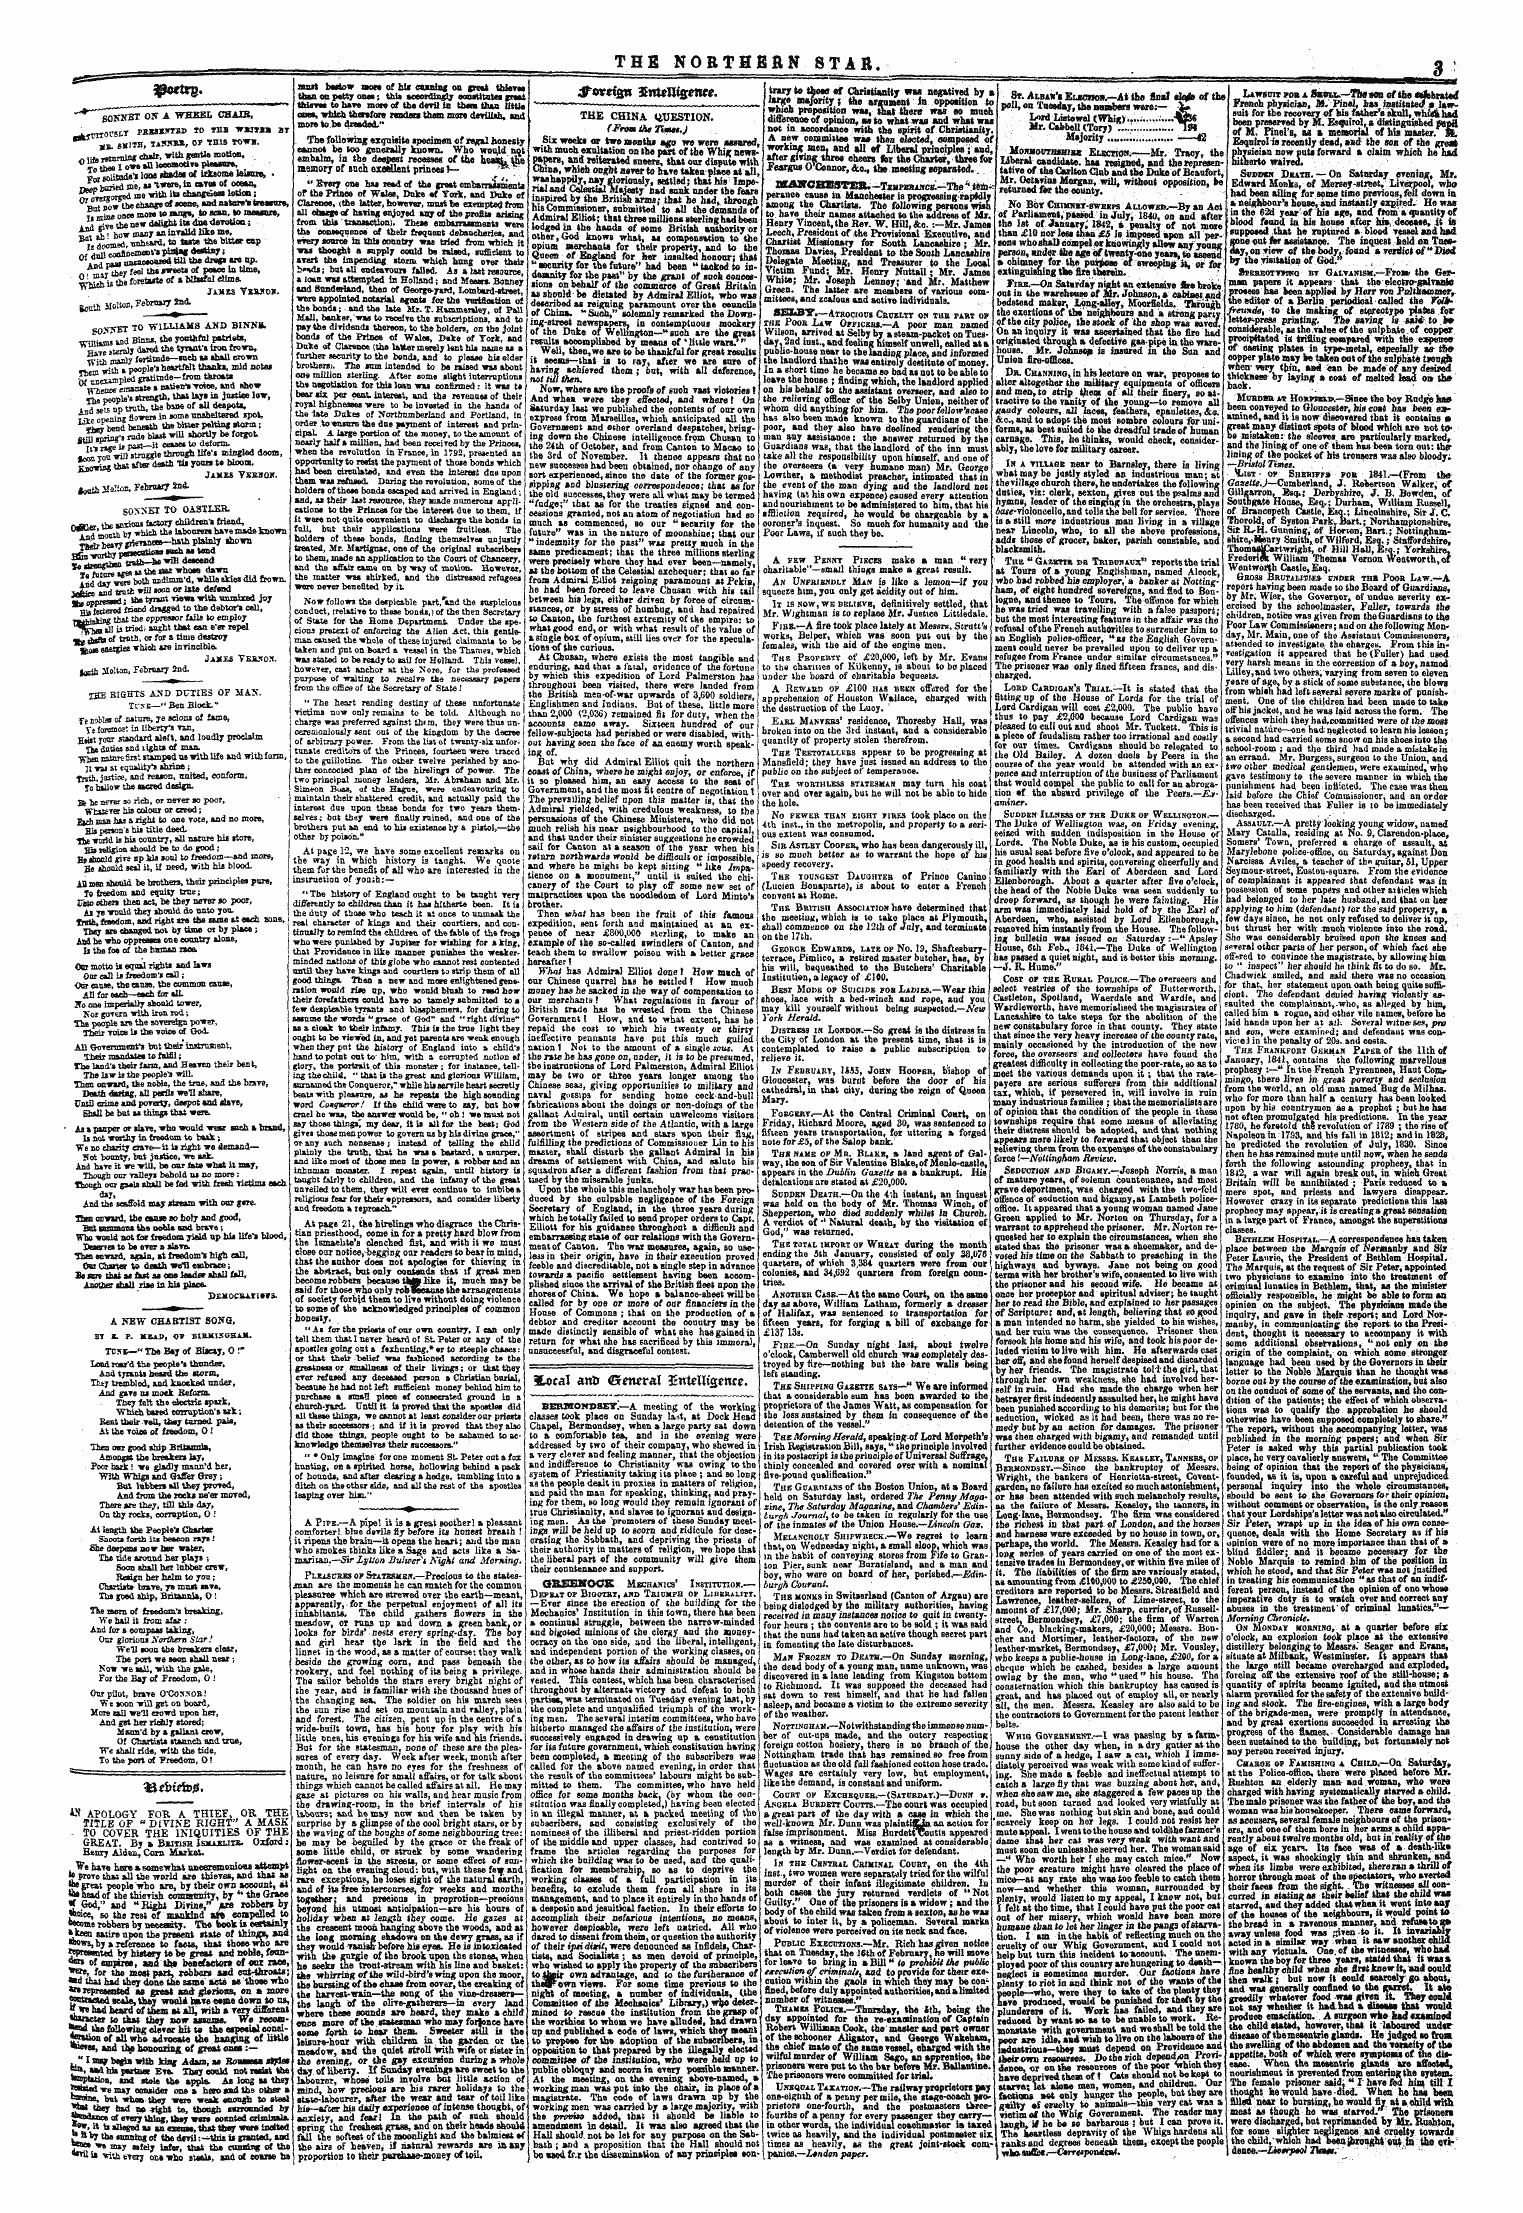 Northern Star (1837-1852): jS F Y, 4th edition - Sosset To Oastler.